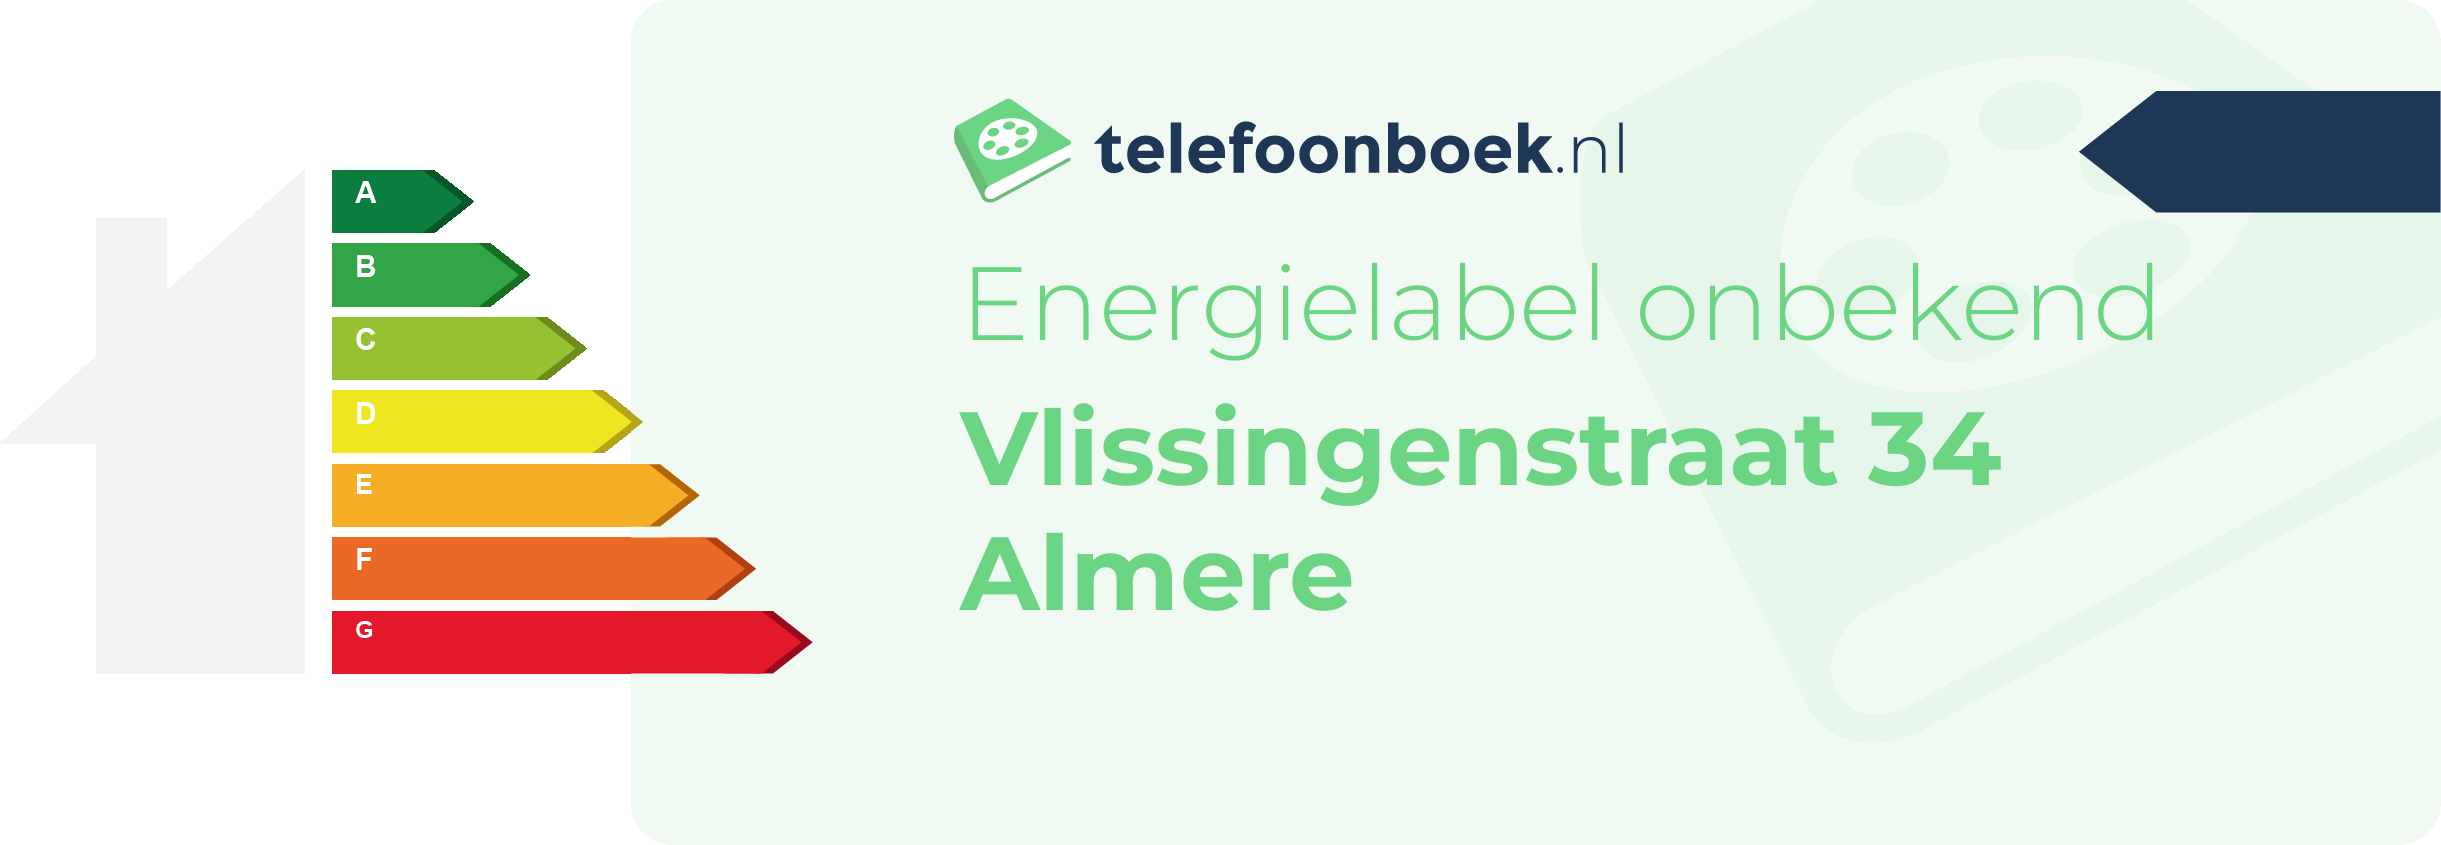 Energielabel Vlissingenstraat 34 Almere